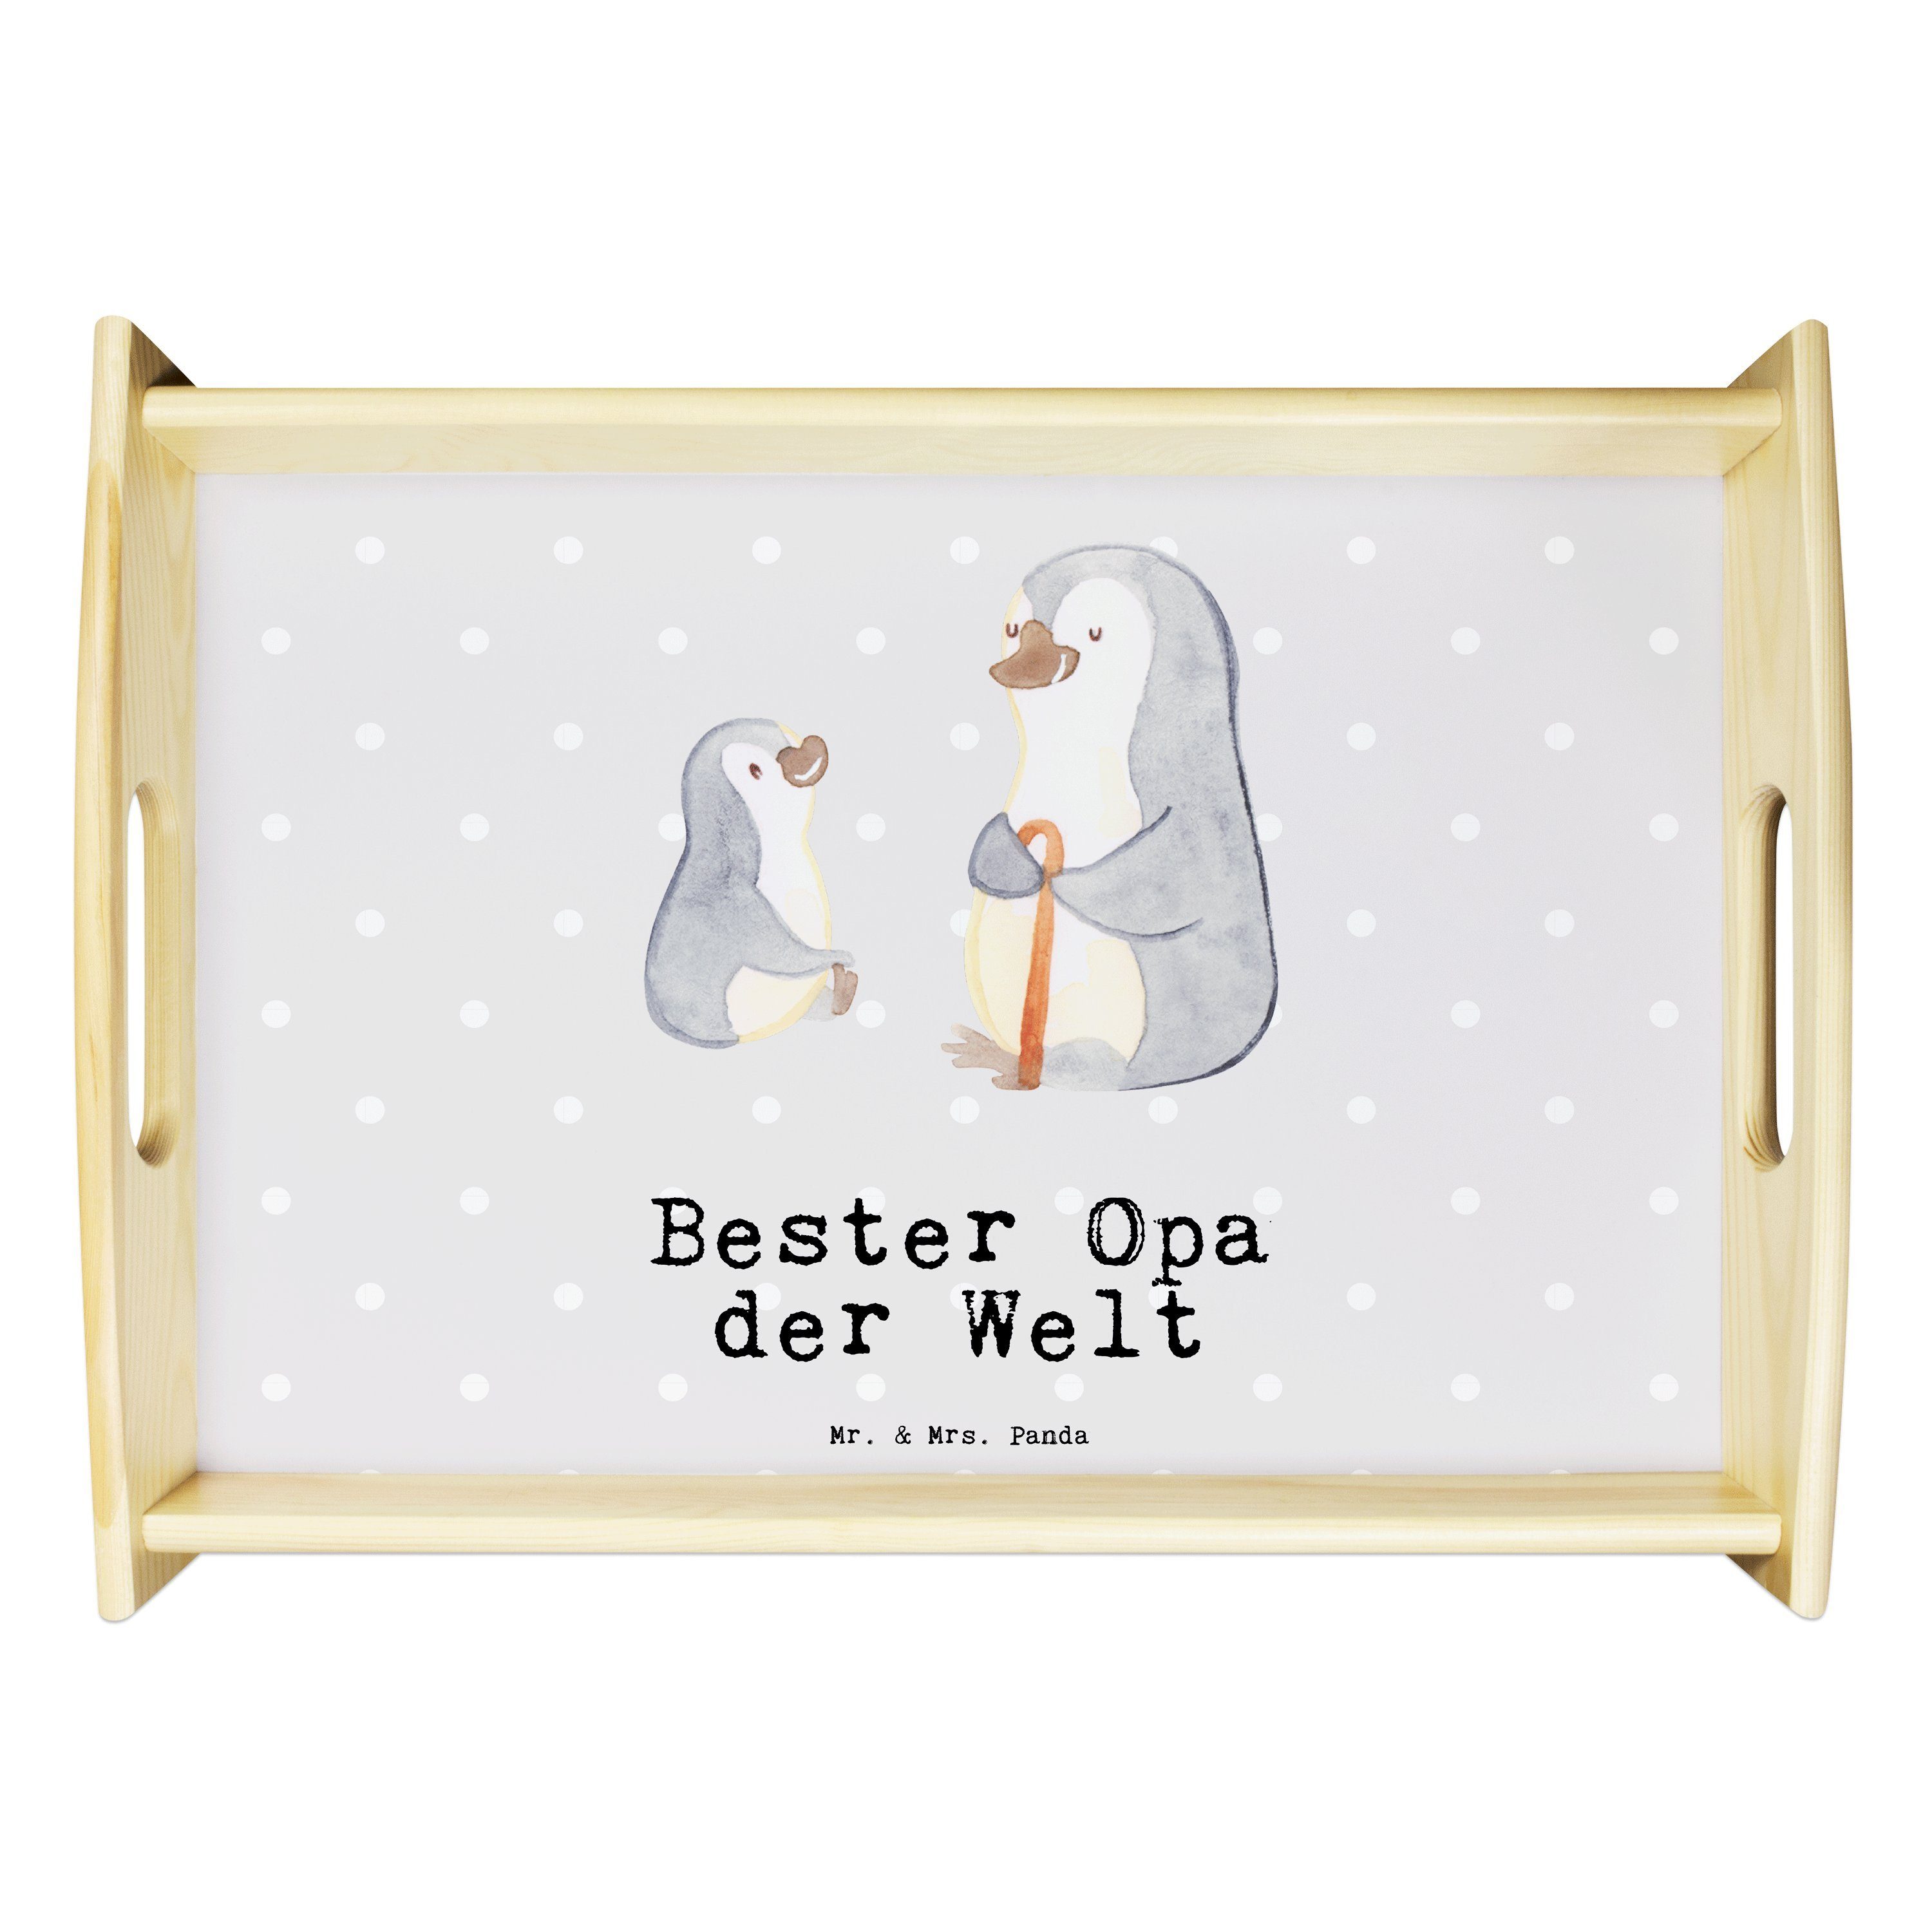 Mr. & Mrs. Panda Tablett Pinguin Bester Opa der Welt - Grau Pastell - Geschenk, Geburtstagsges, Echtholz lasiert, (1-tlg)